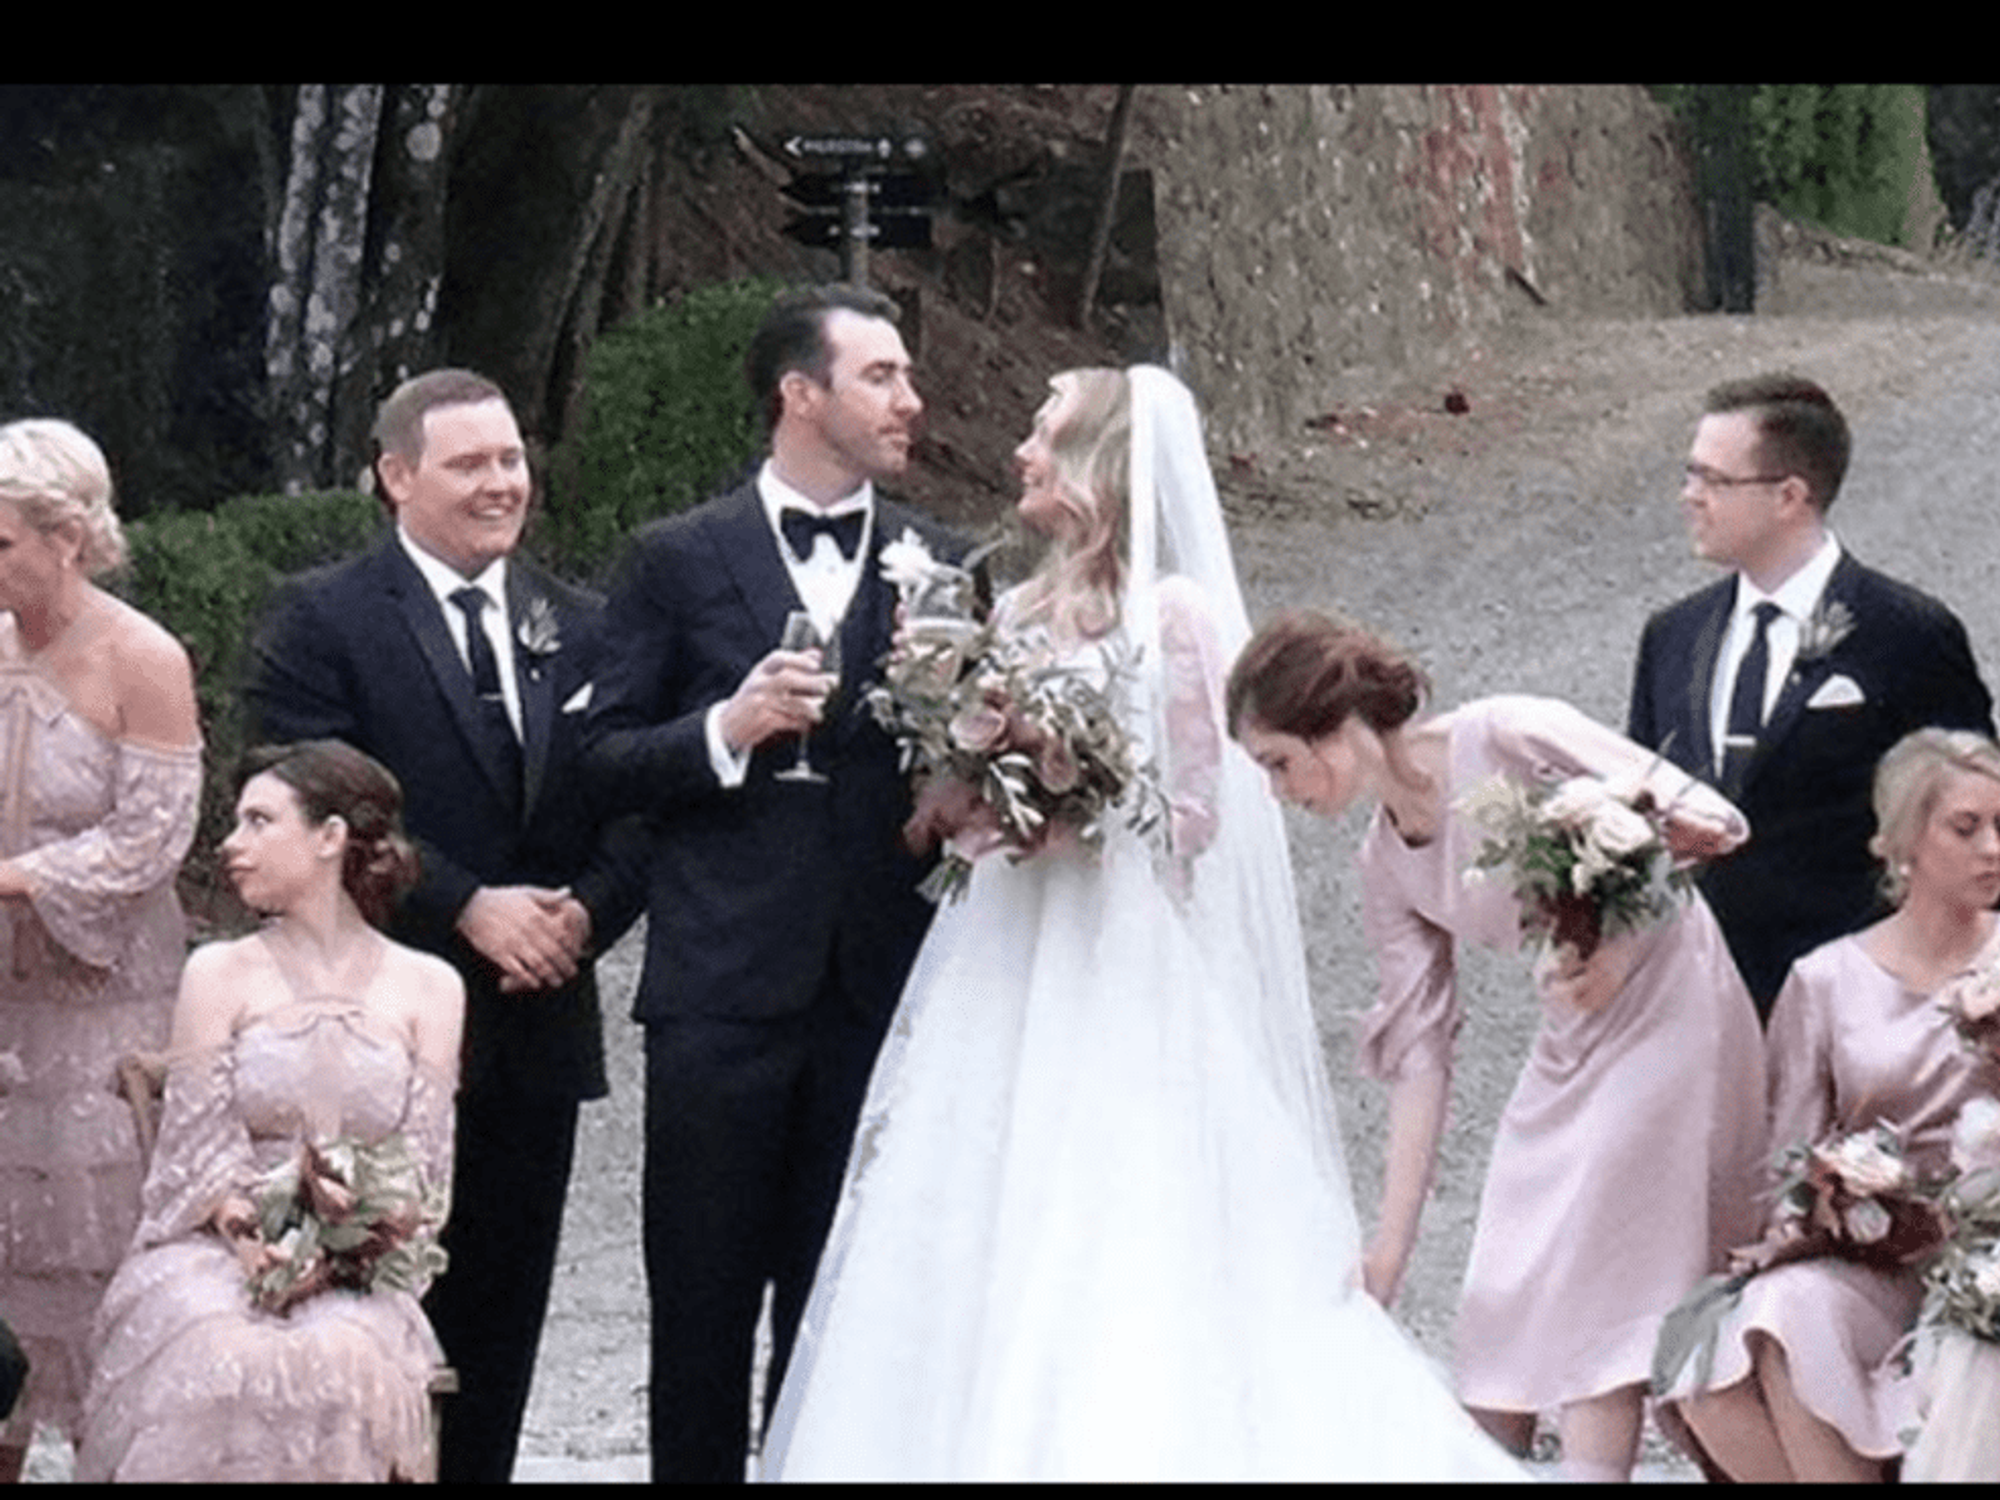 Kate Upton and Justin Verlander Talk Wedding Plans